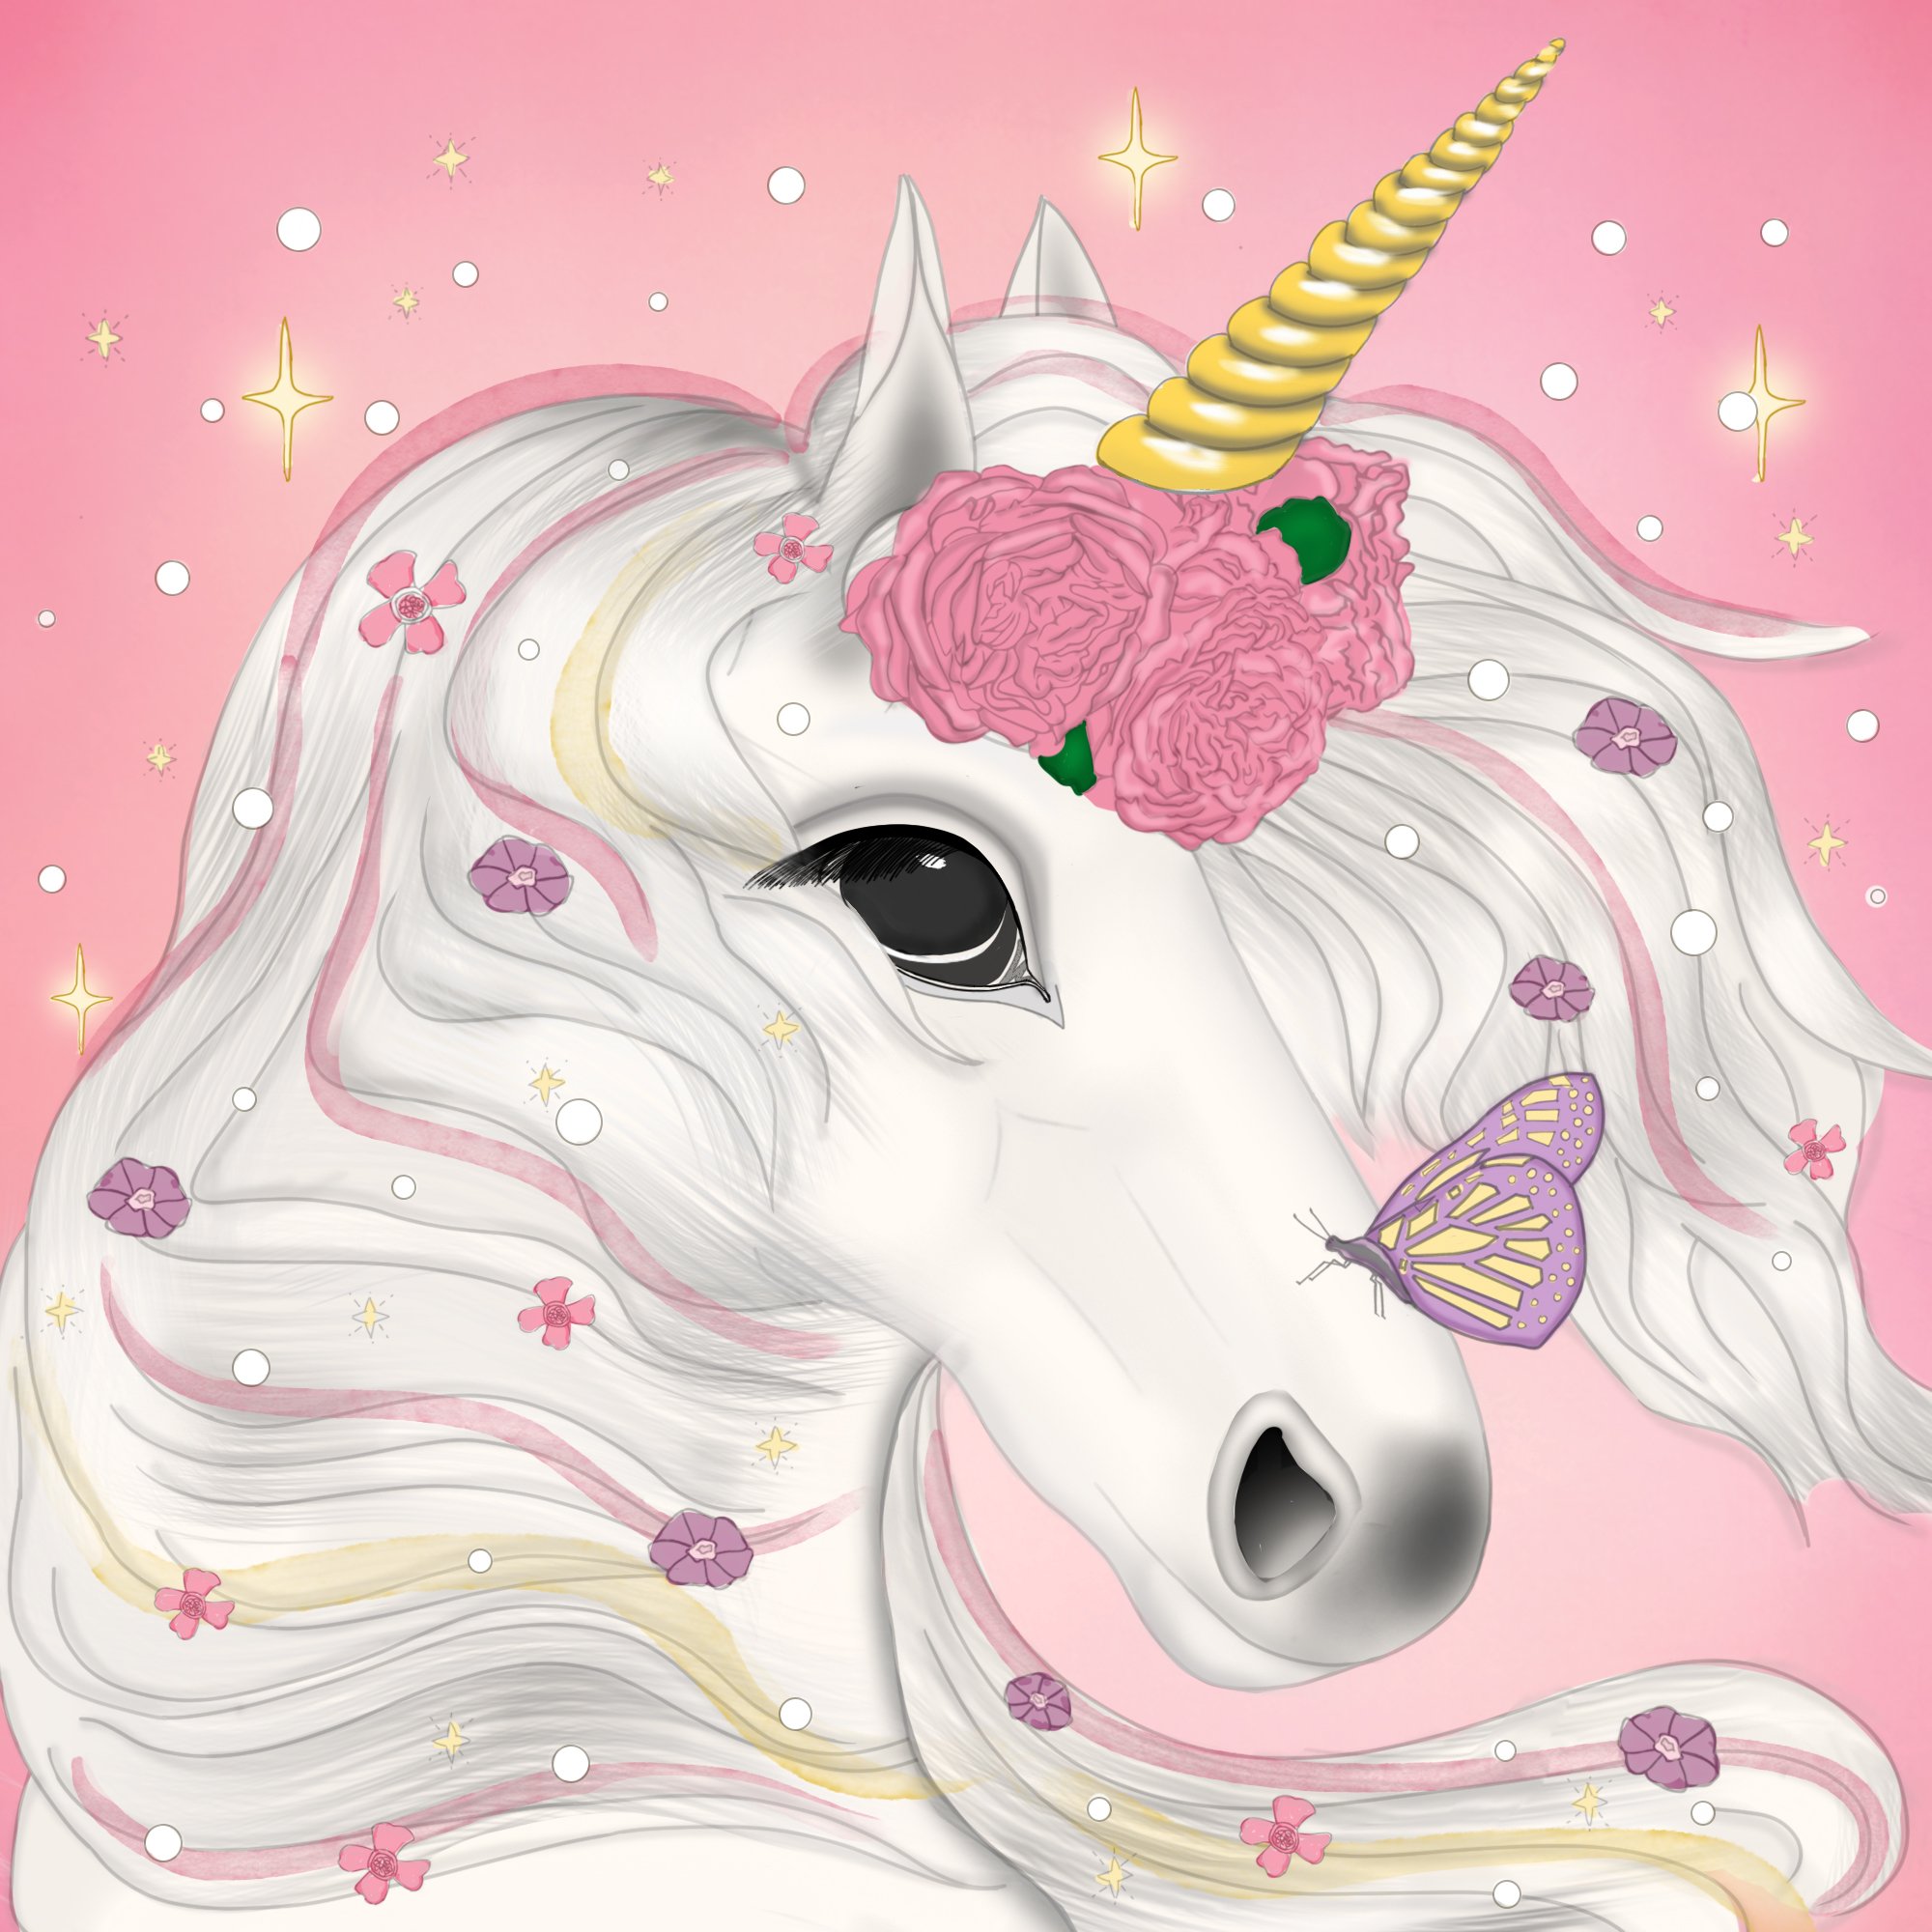 illustration_unicorn_colored_pink_yellow_v2_streamers.jpg